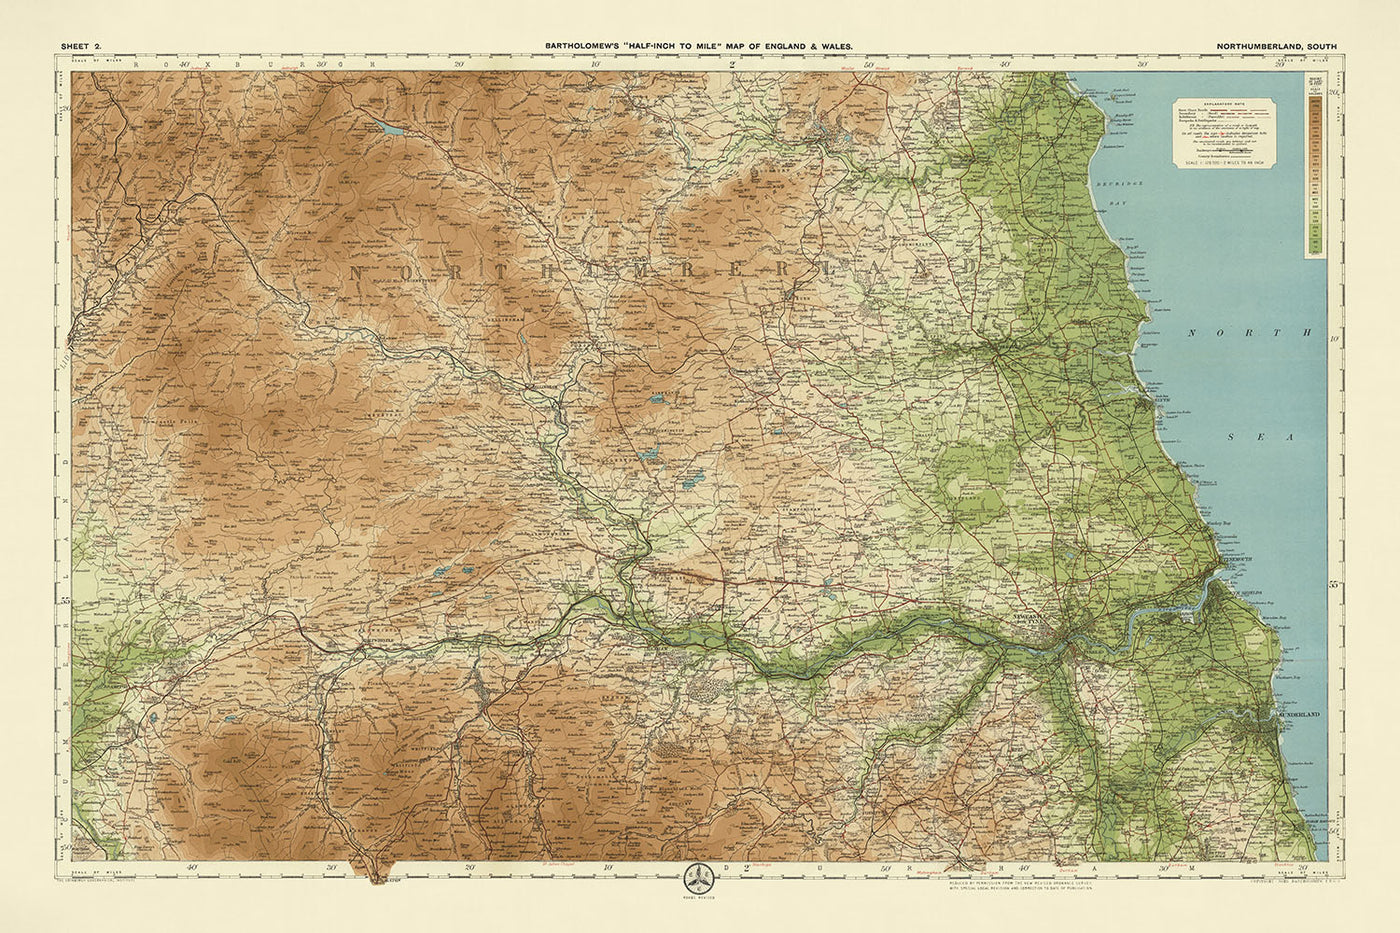 Old OS Map of Northumberland - South by Bartholomew, 1901: Newcastle, Sunderland, Tyne, National Park, Hadrian's Wall, North Sea